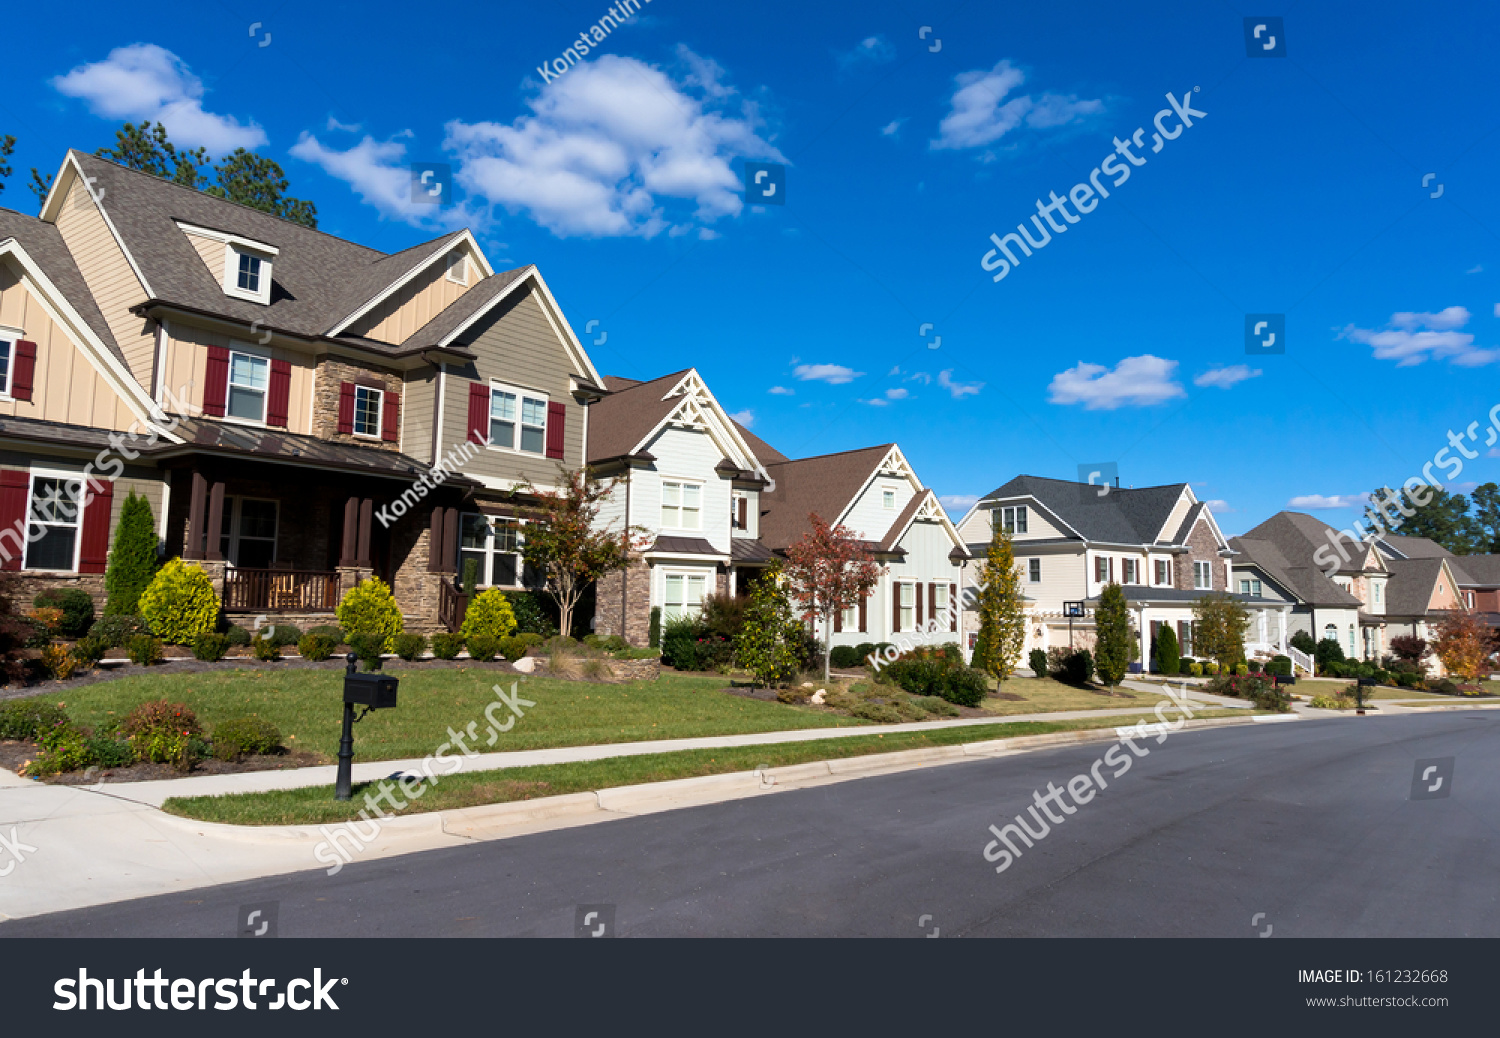 Street of large suburban homes #161232668